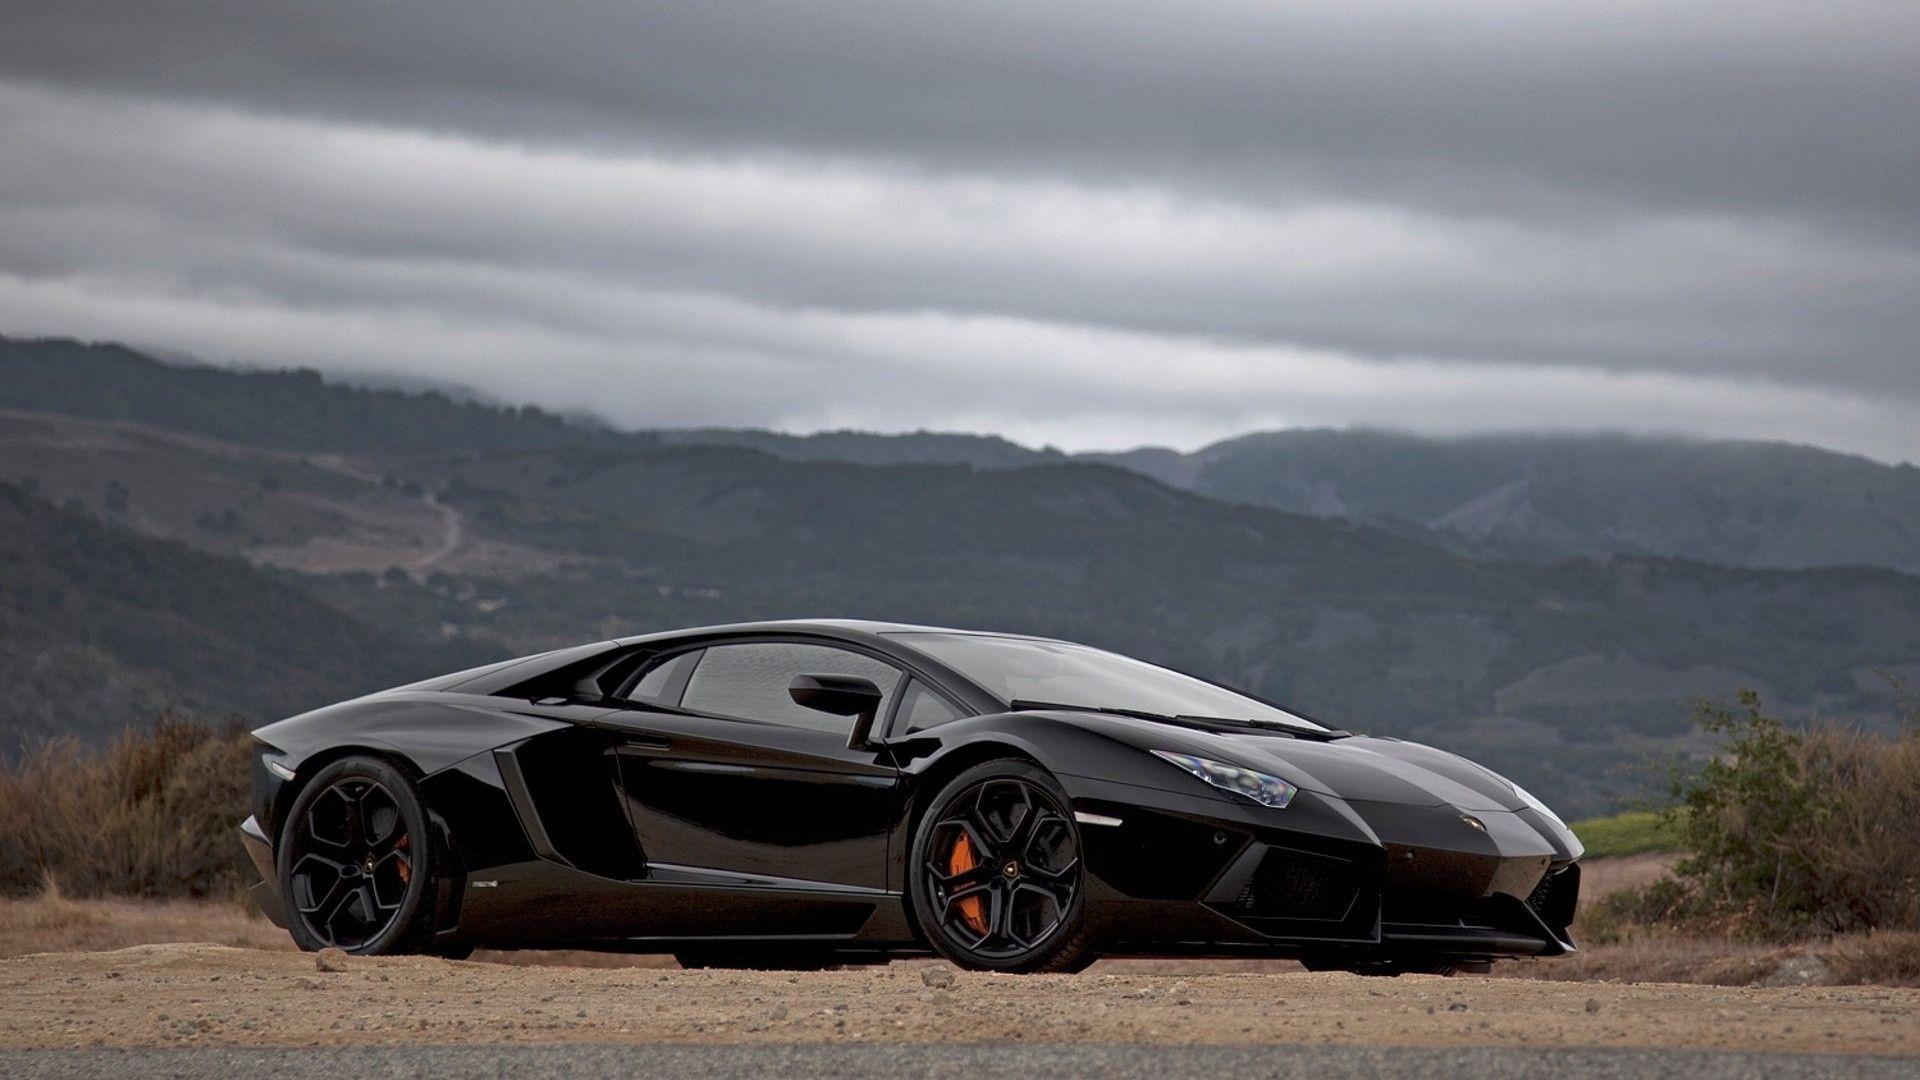 Lamborghini Aventador Black wallpaper 147694